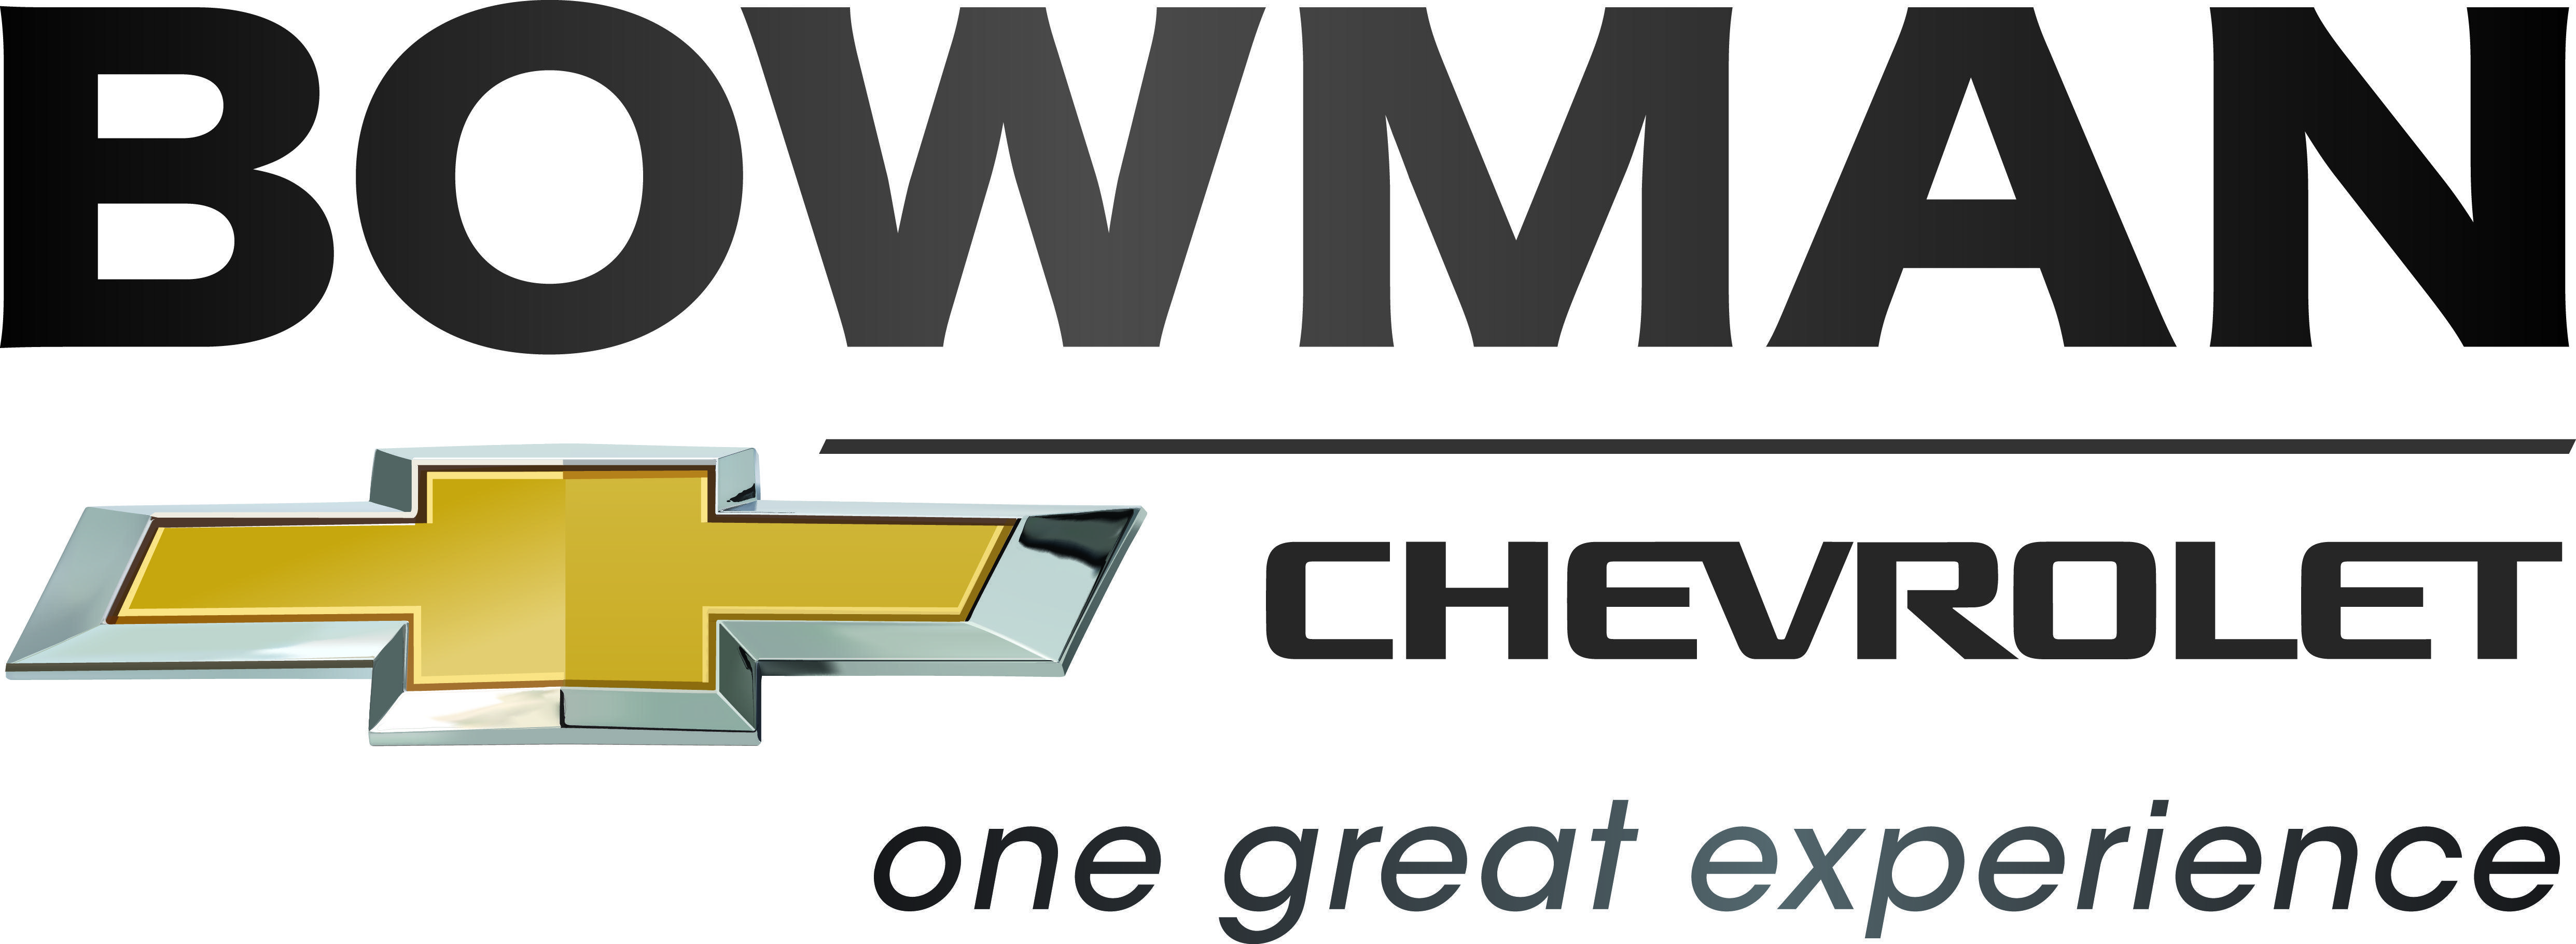 Chevrolet Malibu Logo - Clarkston Chevrolet Malibu Vehicles